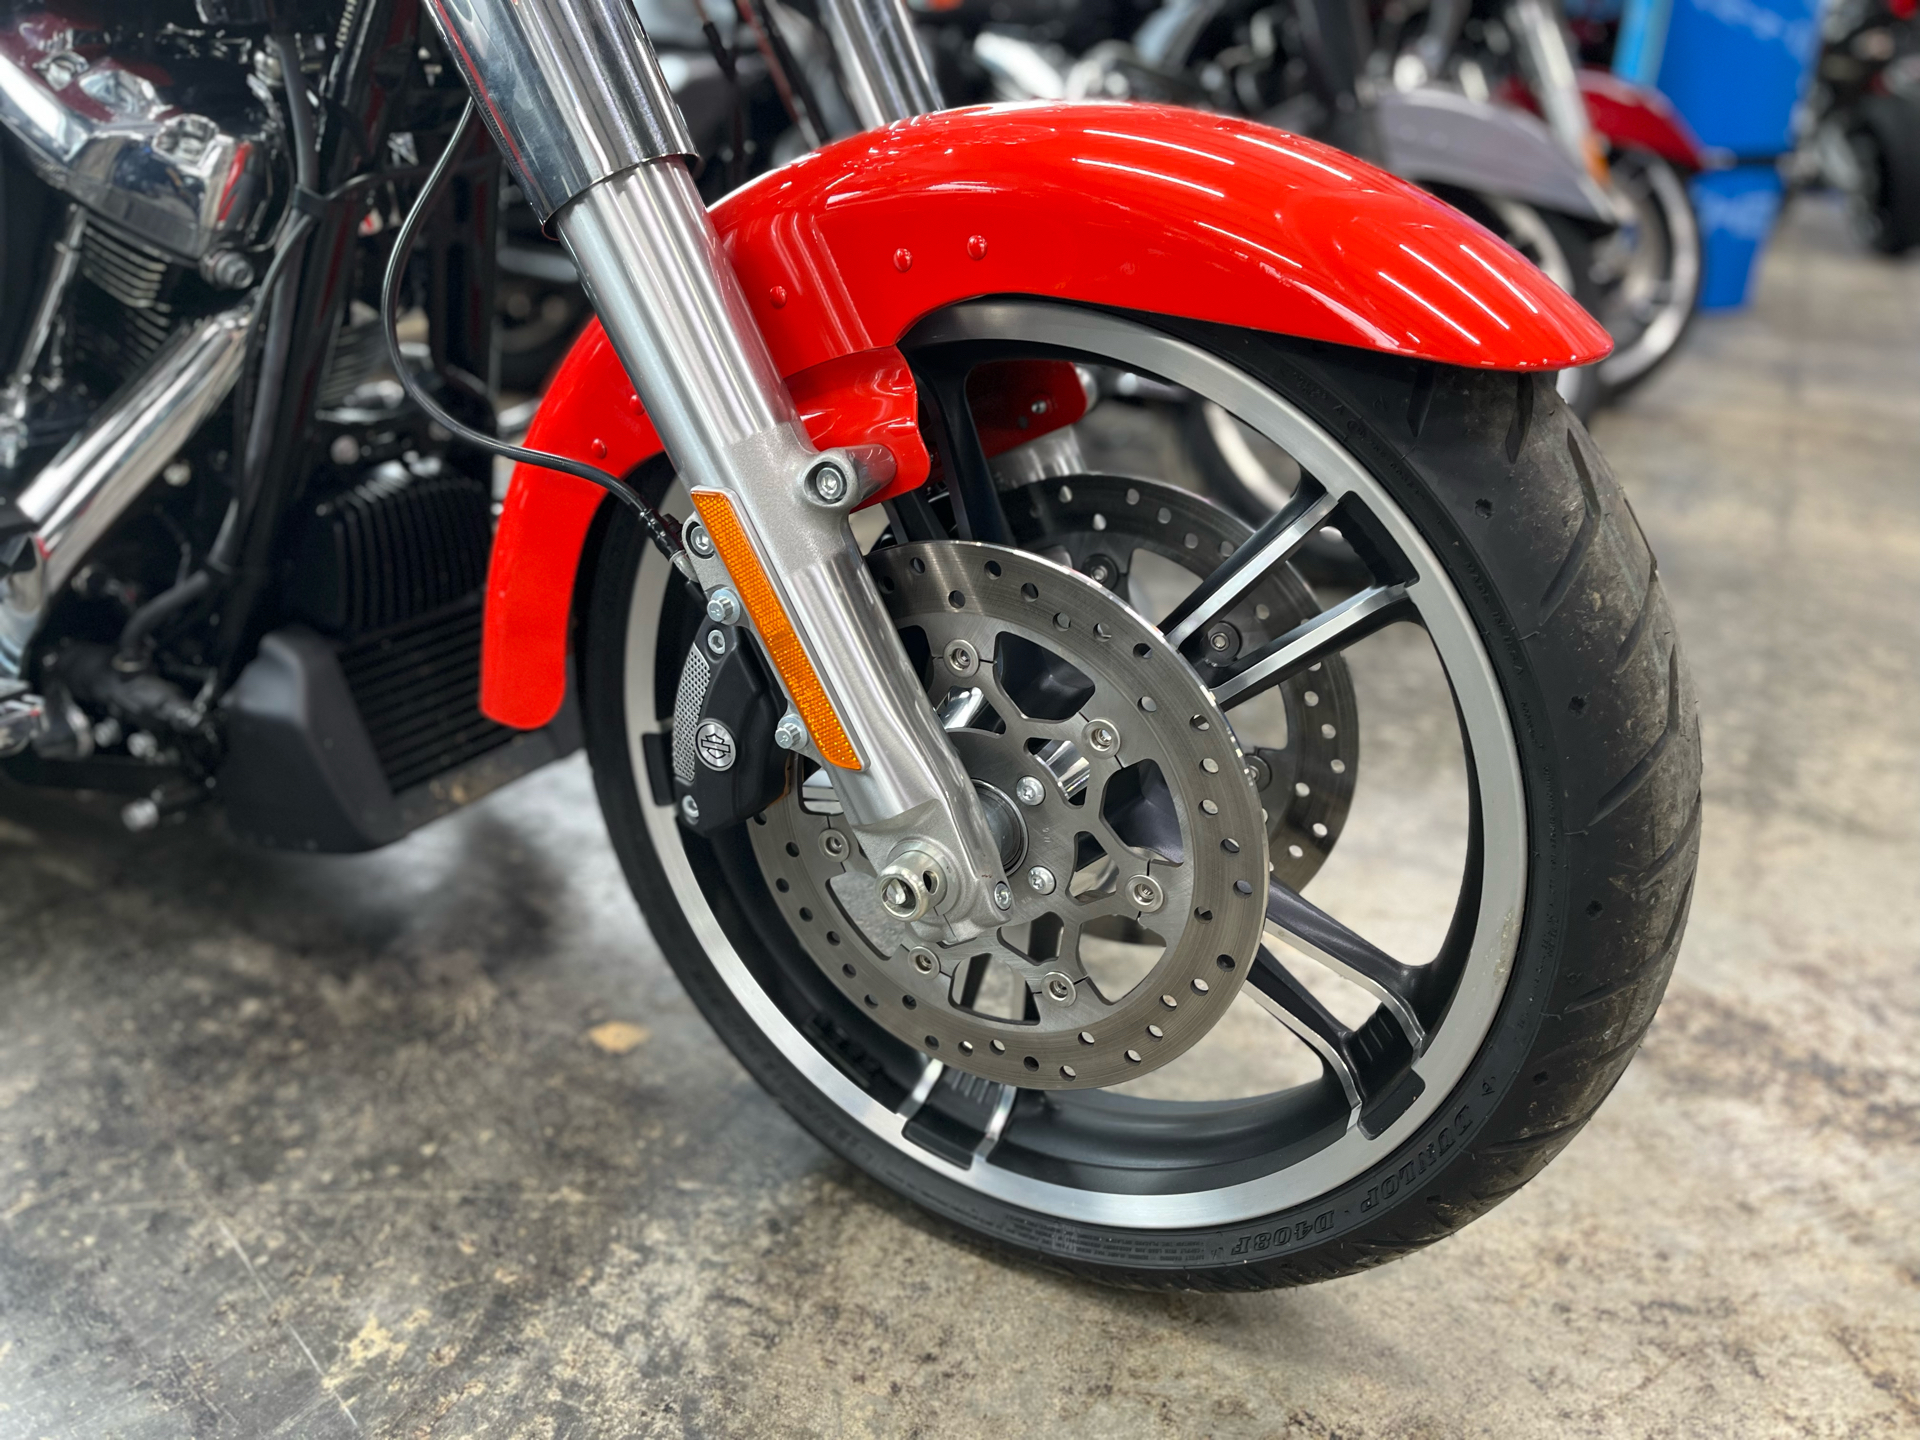 2020 Harley-Davidson Freewheeler® in Albemarle, North Carolina - Photo 4